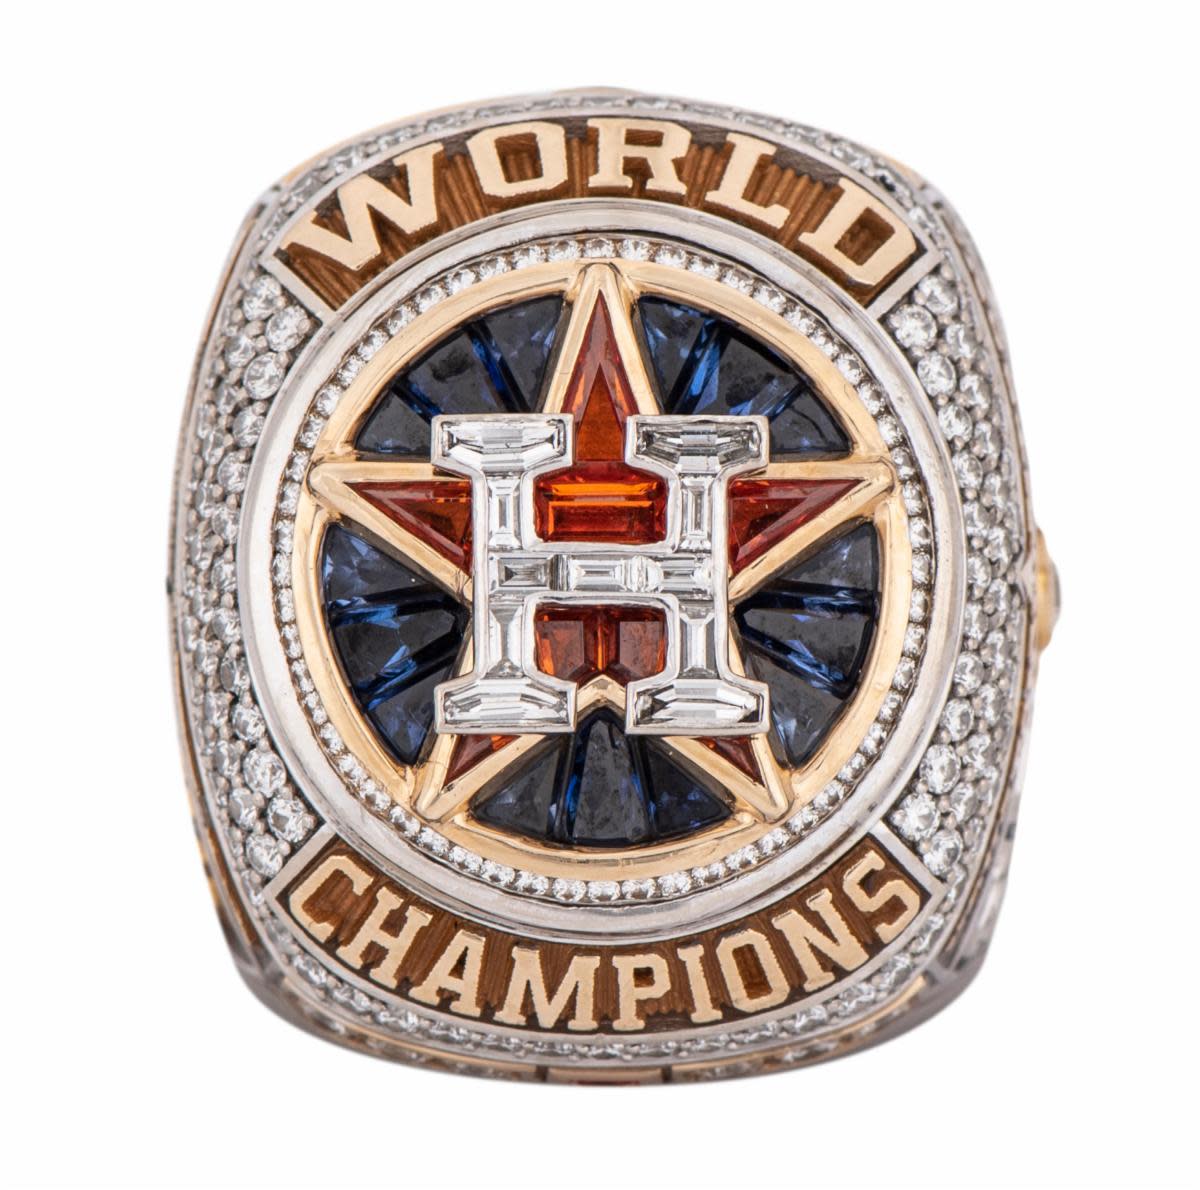  Emblem Source Houston Astros 2017 World Series